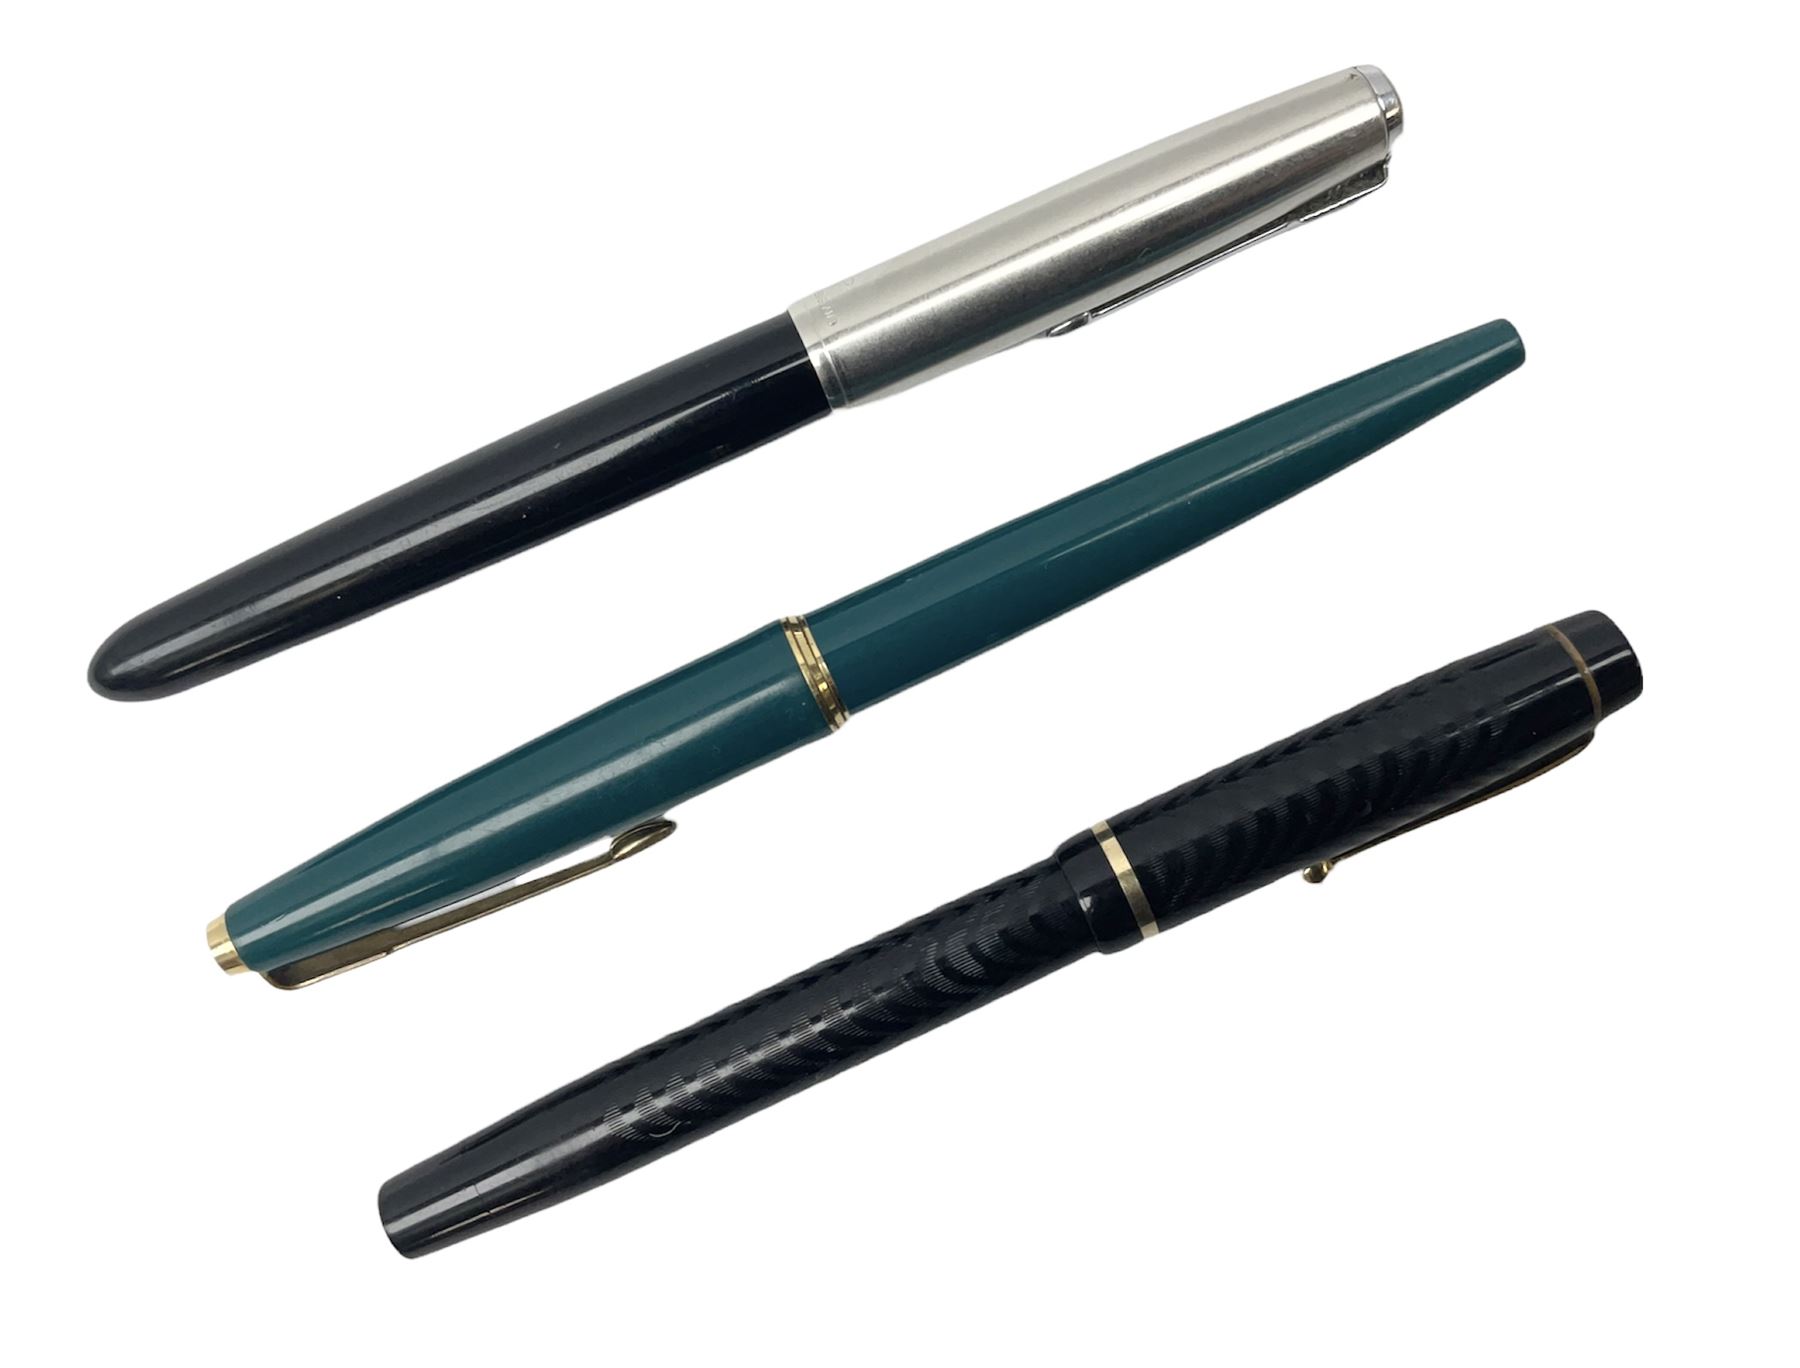 Three fountain pens